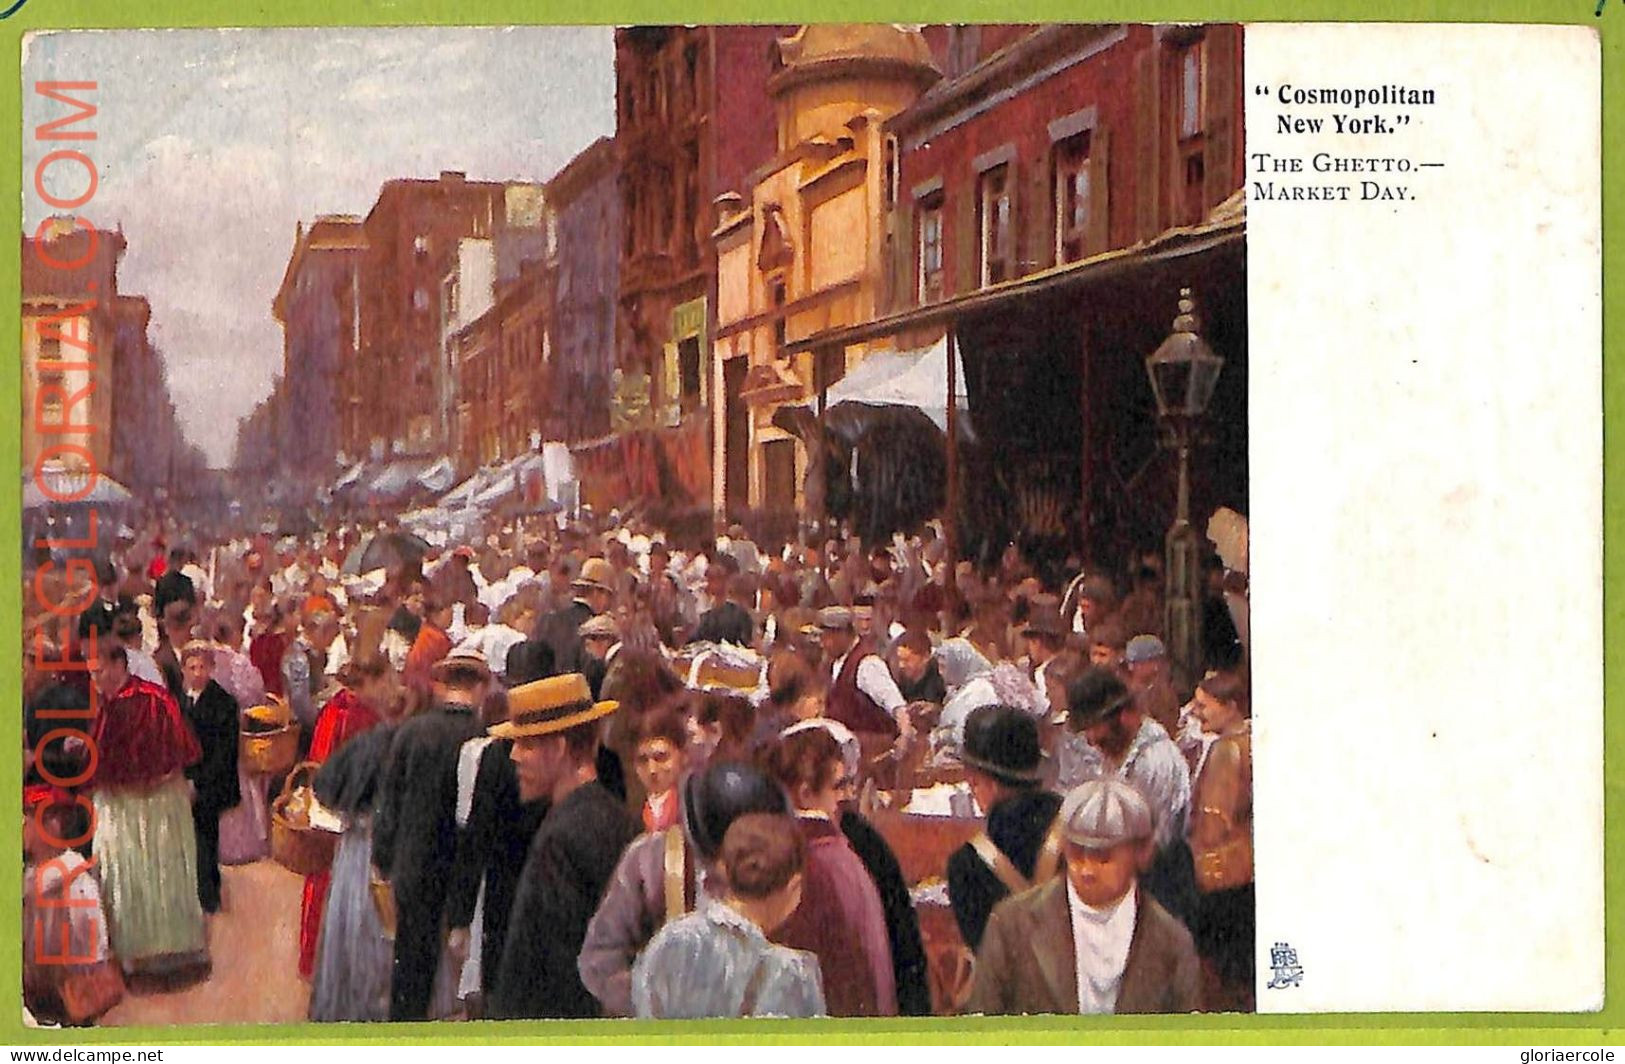 Af3578 - JUDAICA Vintage Postcard: USA - New York - The Ghetto - Market Day - Altri Monumenti, Edifici